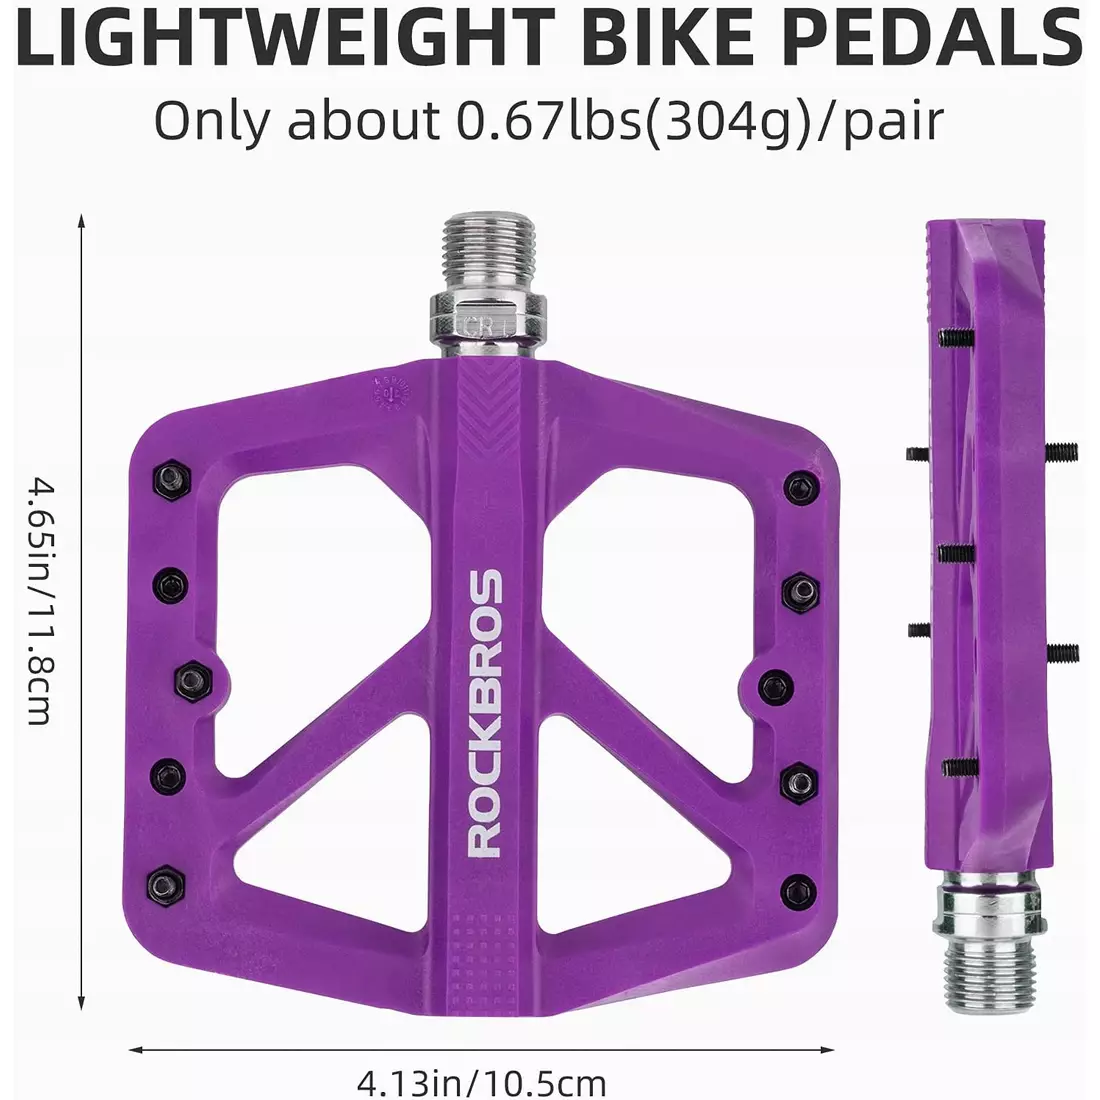 Rockbros platform pedals nylon Violet 2021-12ARD